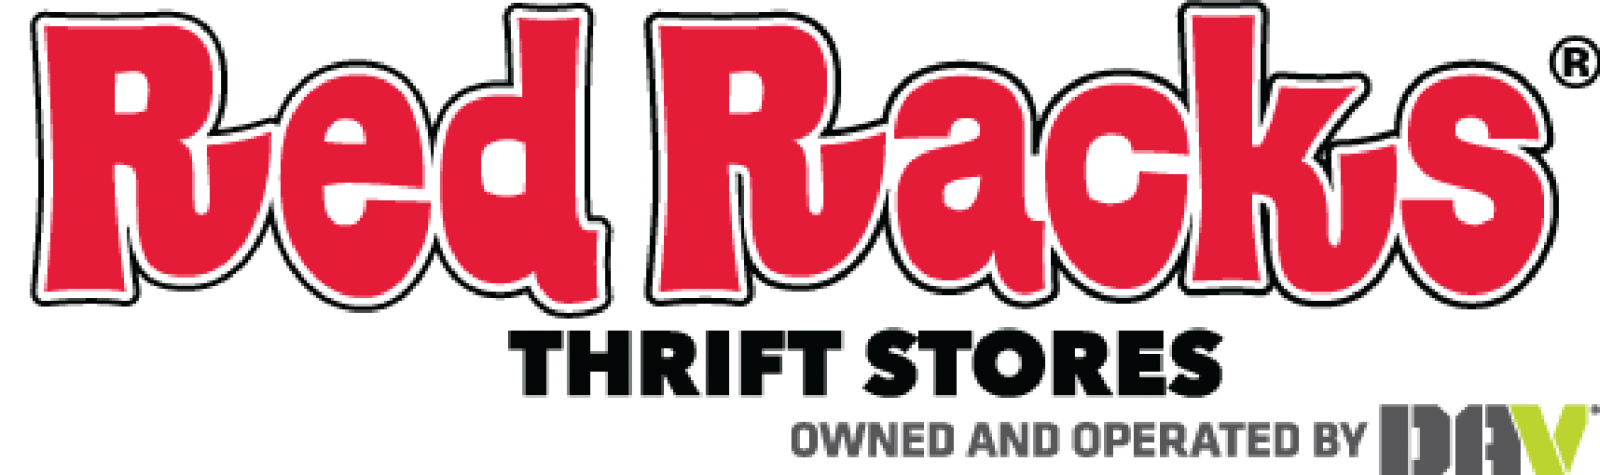 Red Racks DAV logo - Downtown Lee's Summit